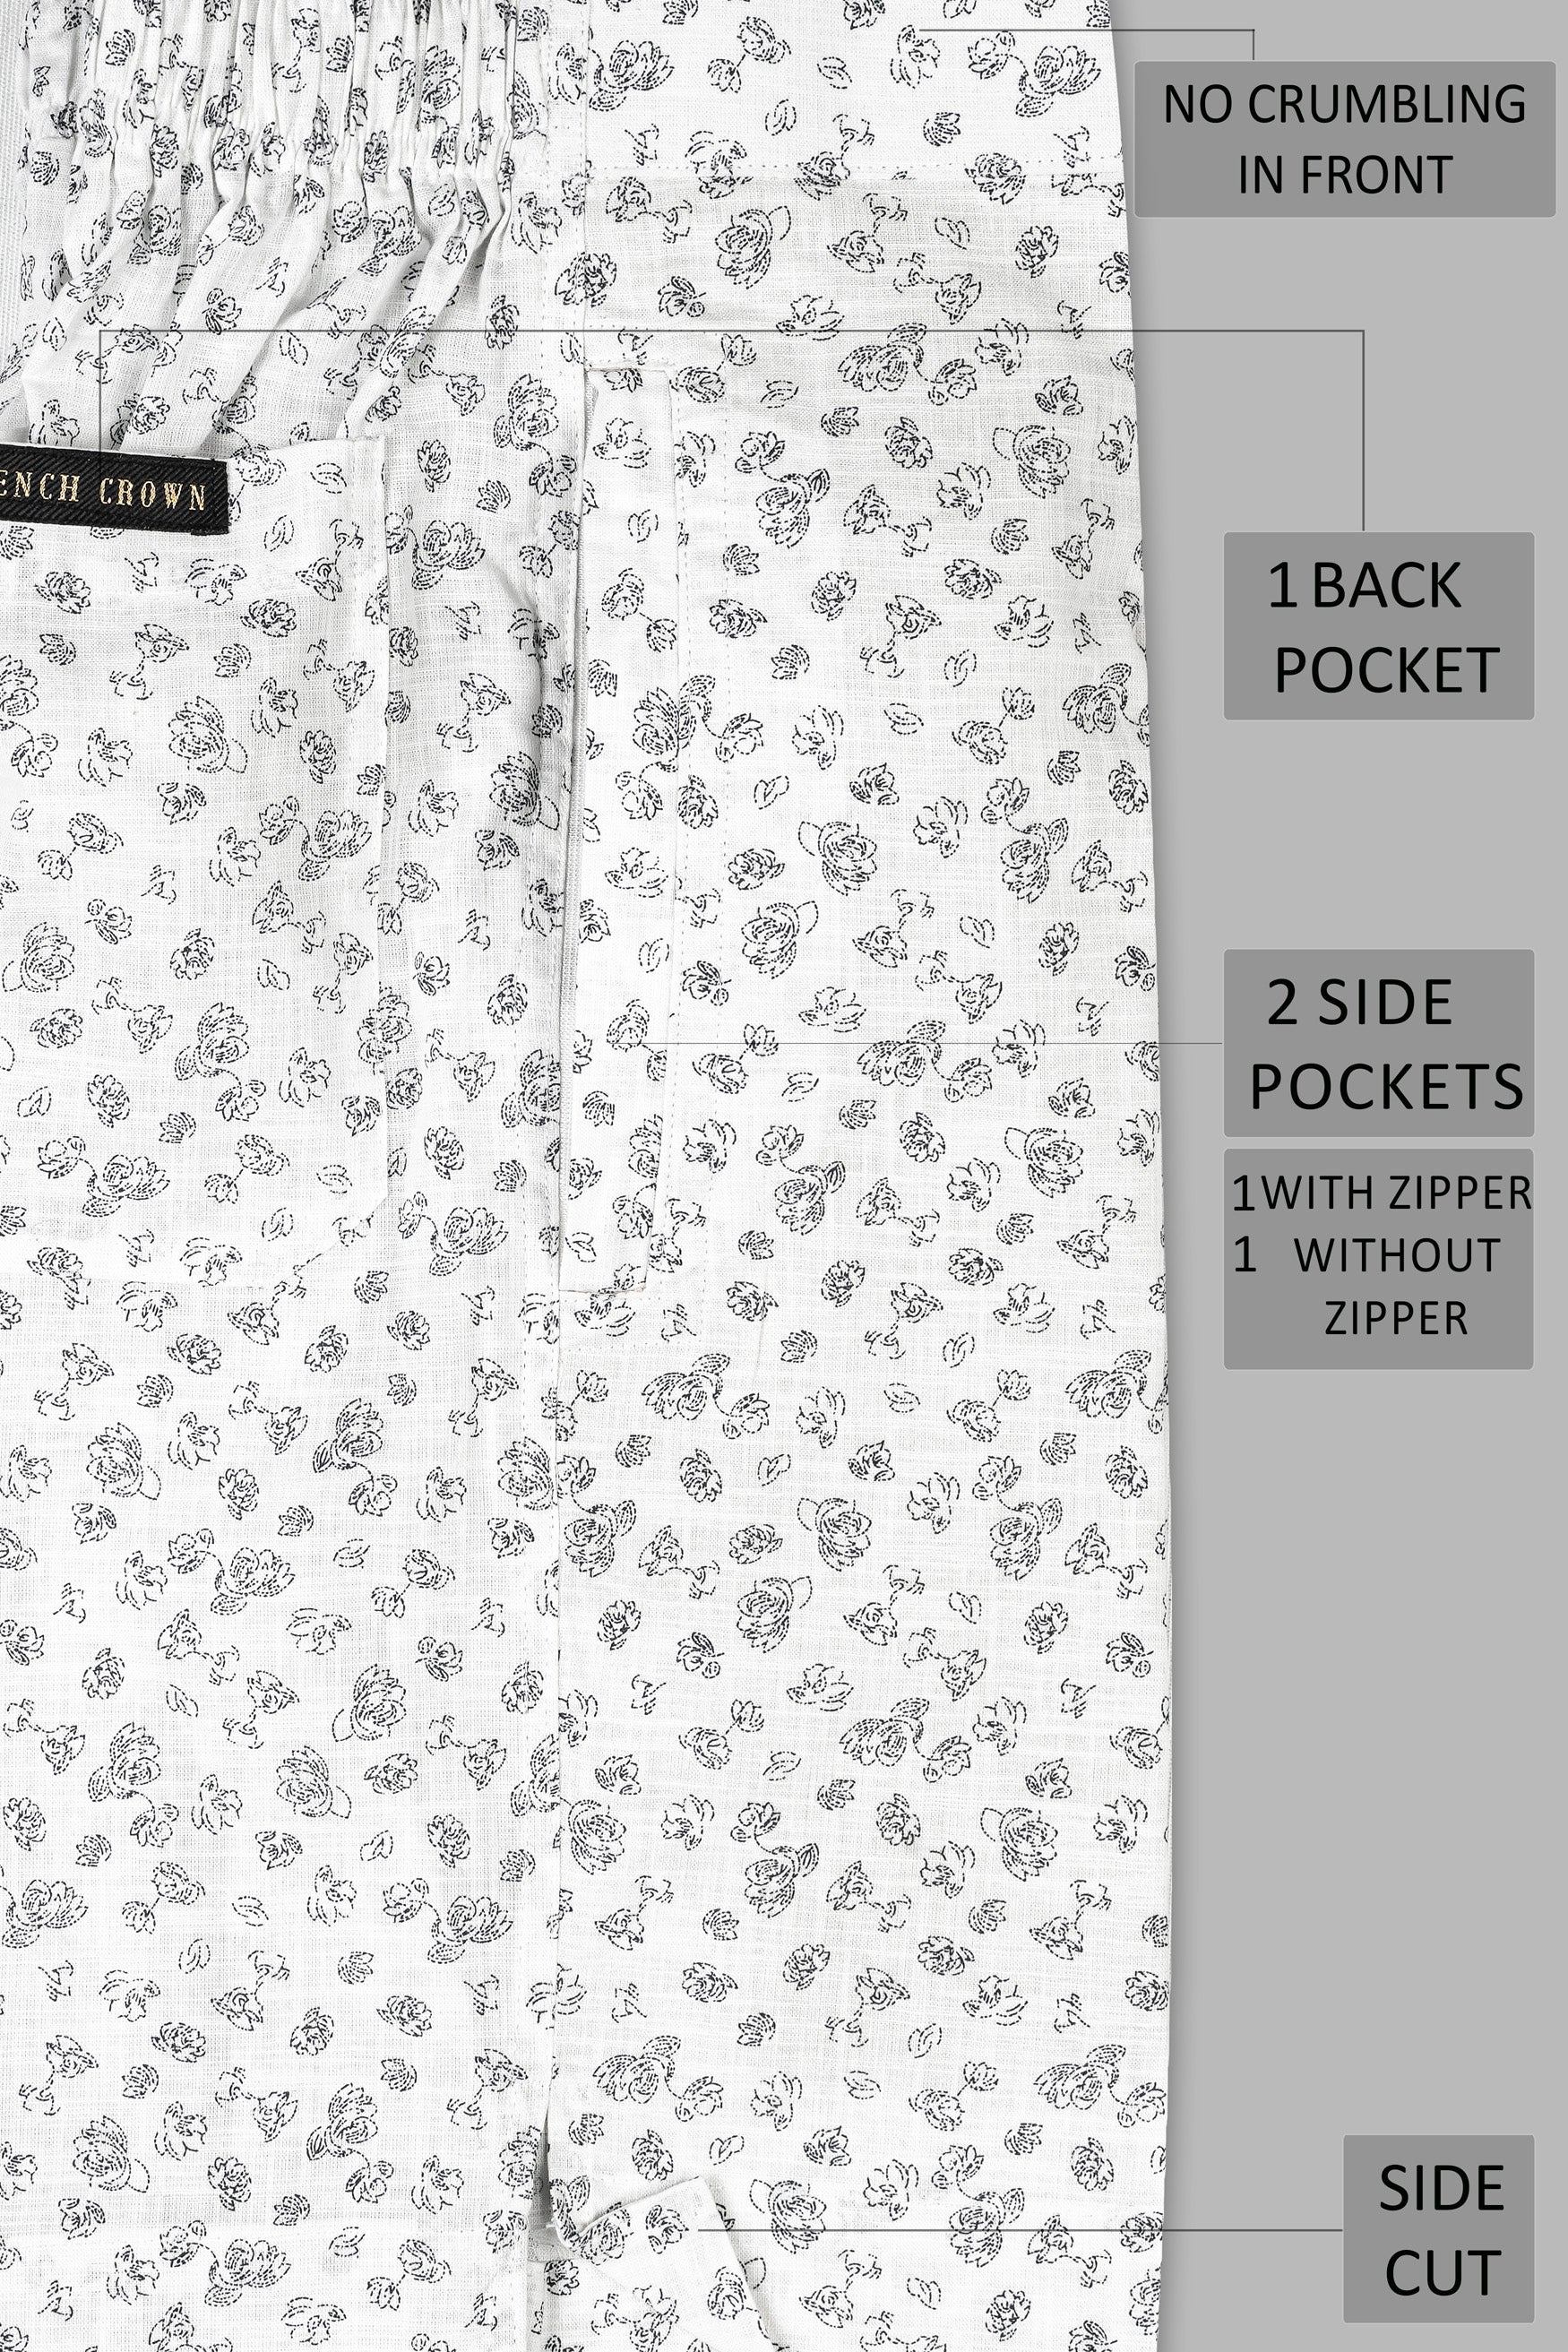 Bright White with Jade Black Flowers Printed Premium Linen Shorts SR347-28,  SR347-30,  SR347-32,  SR347-34,  SR347-36,  SR347-38,  SR347-40,  SR347-42,  SR347-44